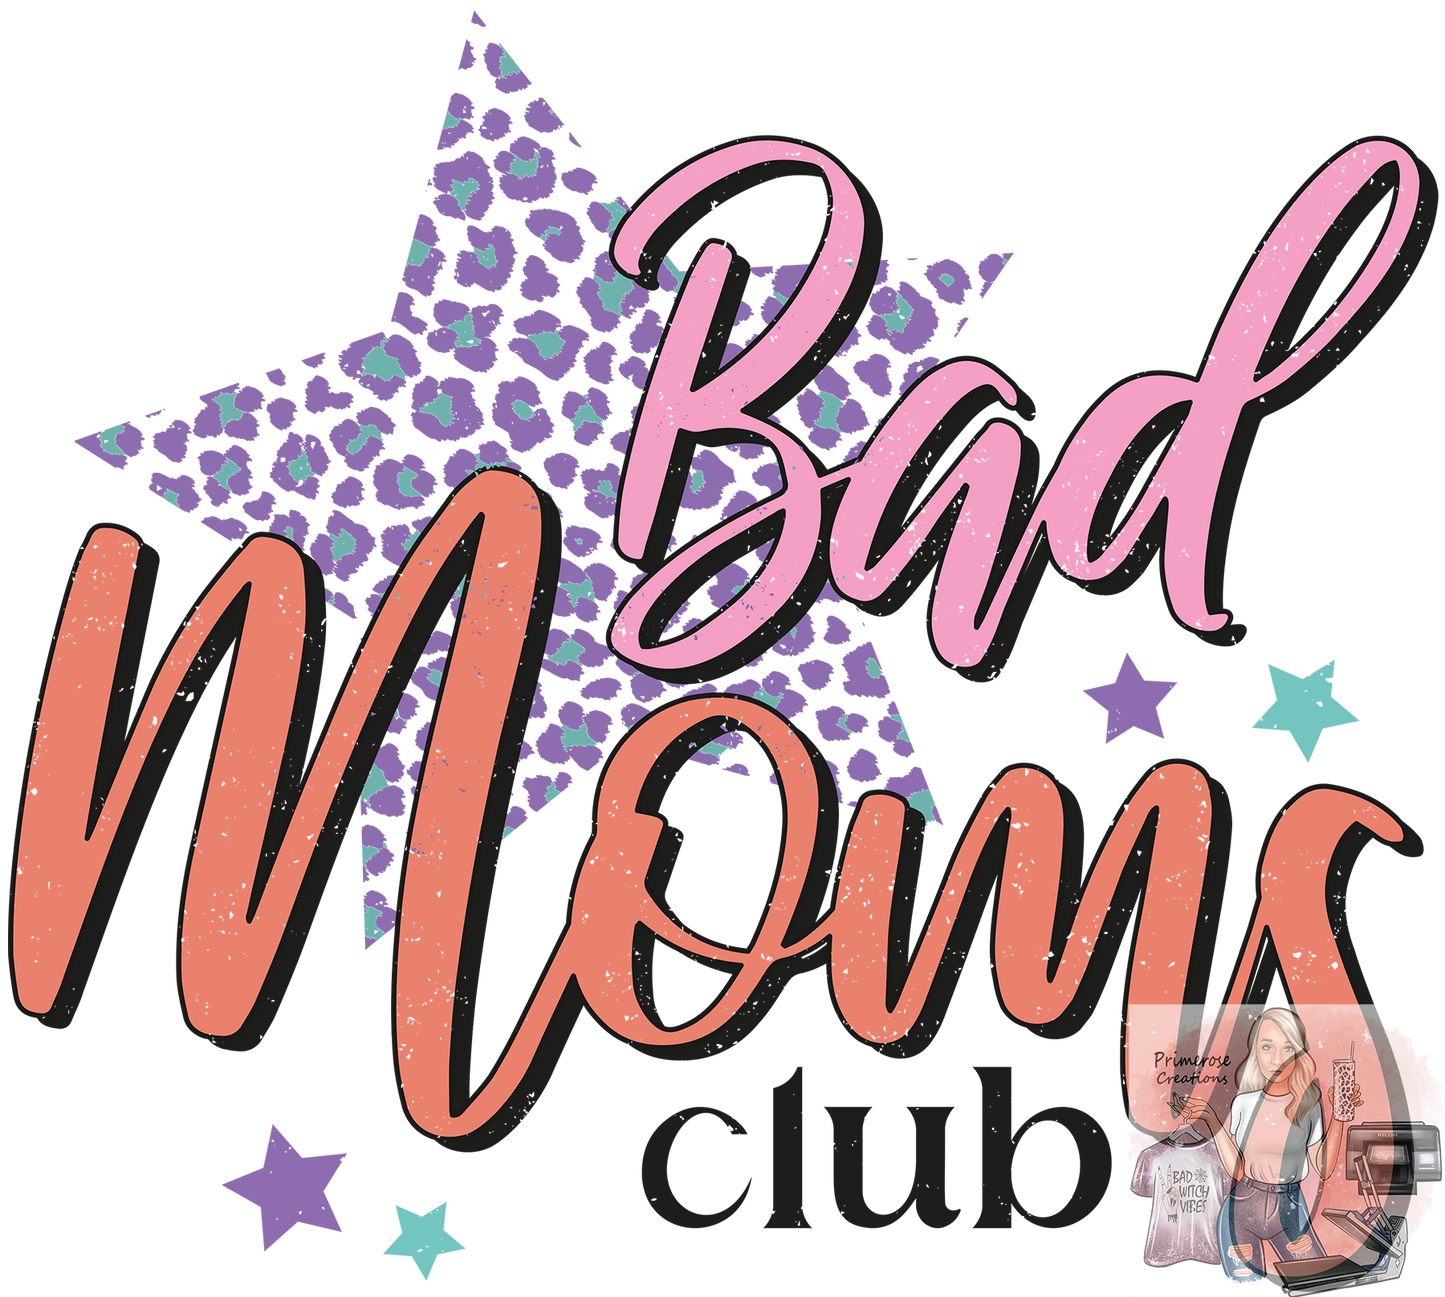 Bad Moms Club Retro DTF